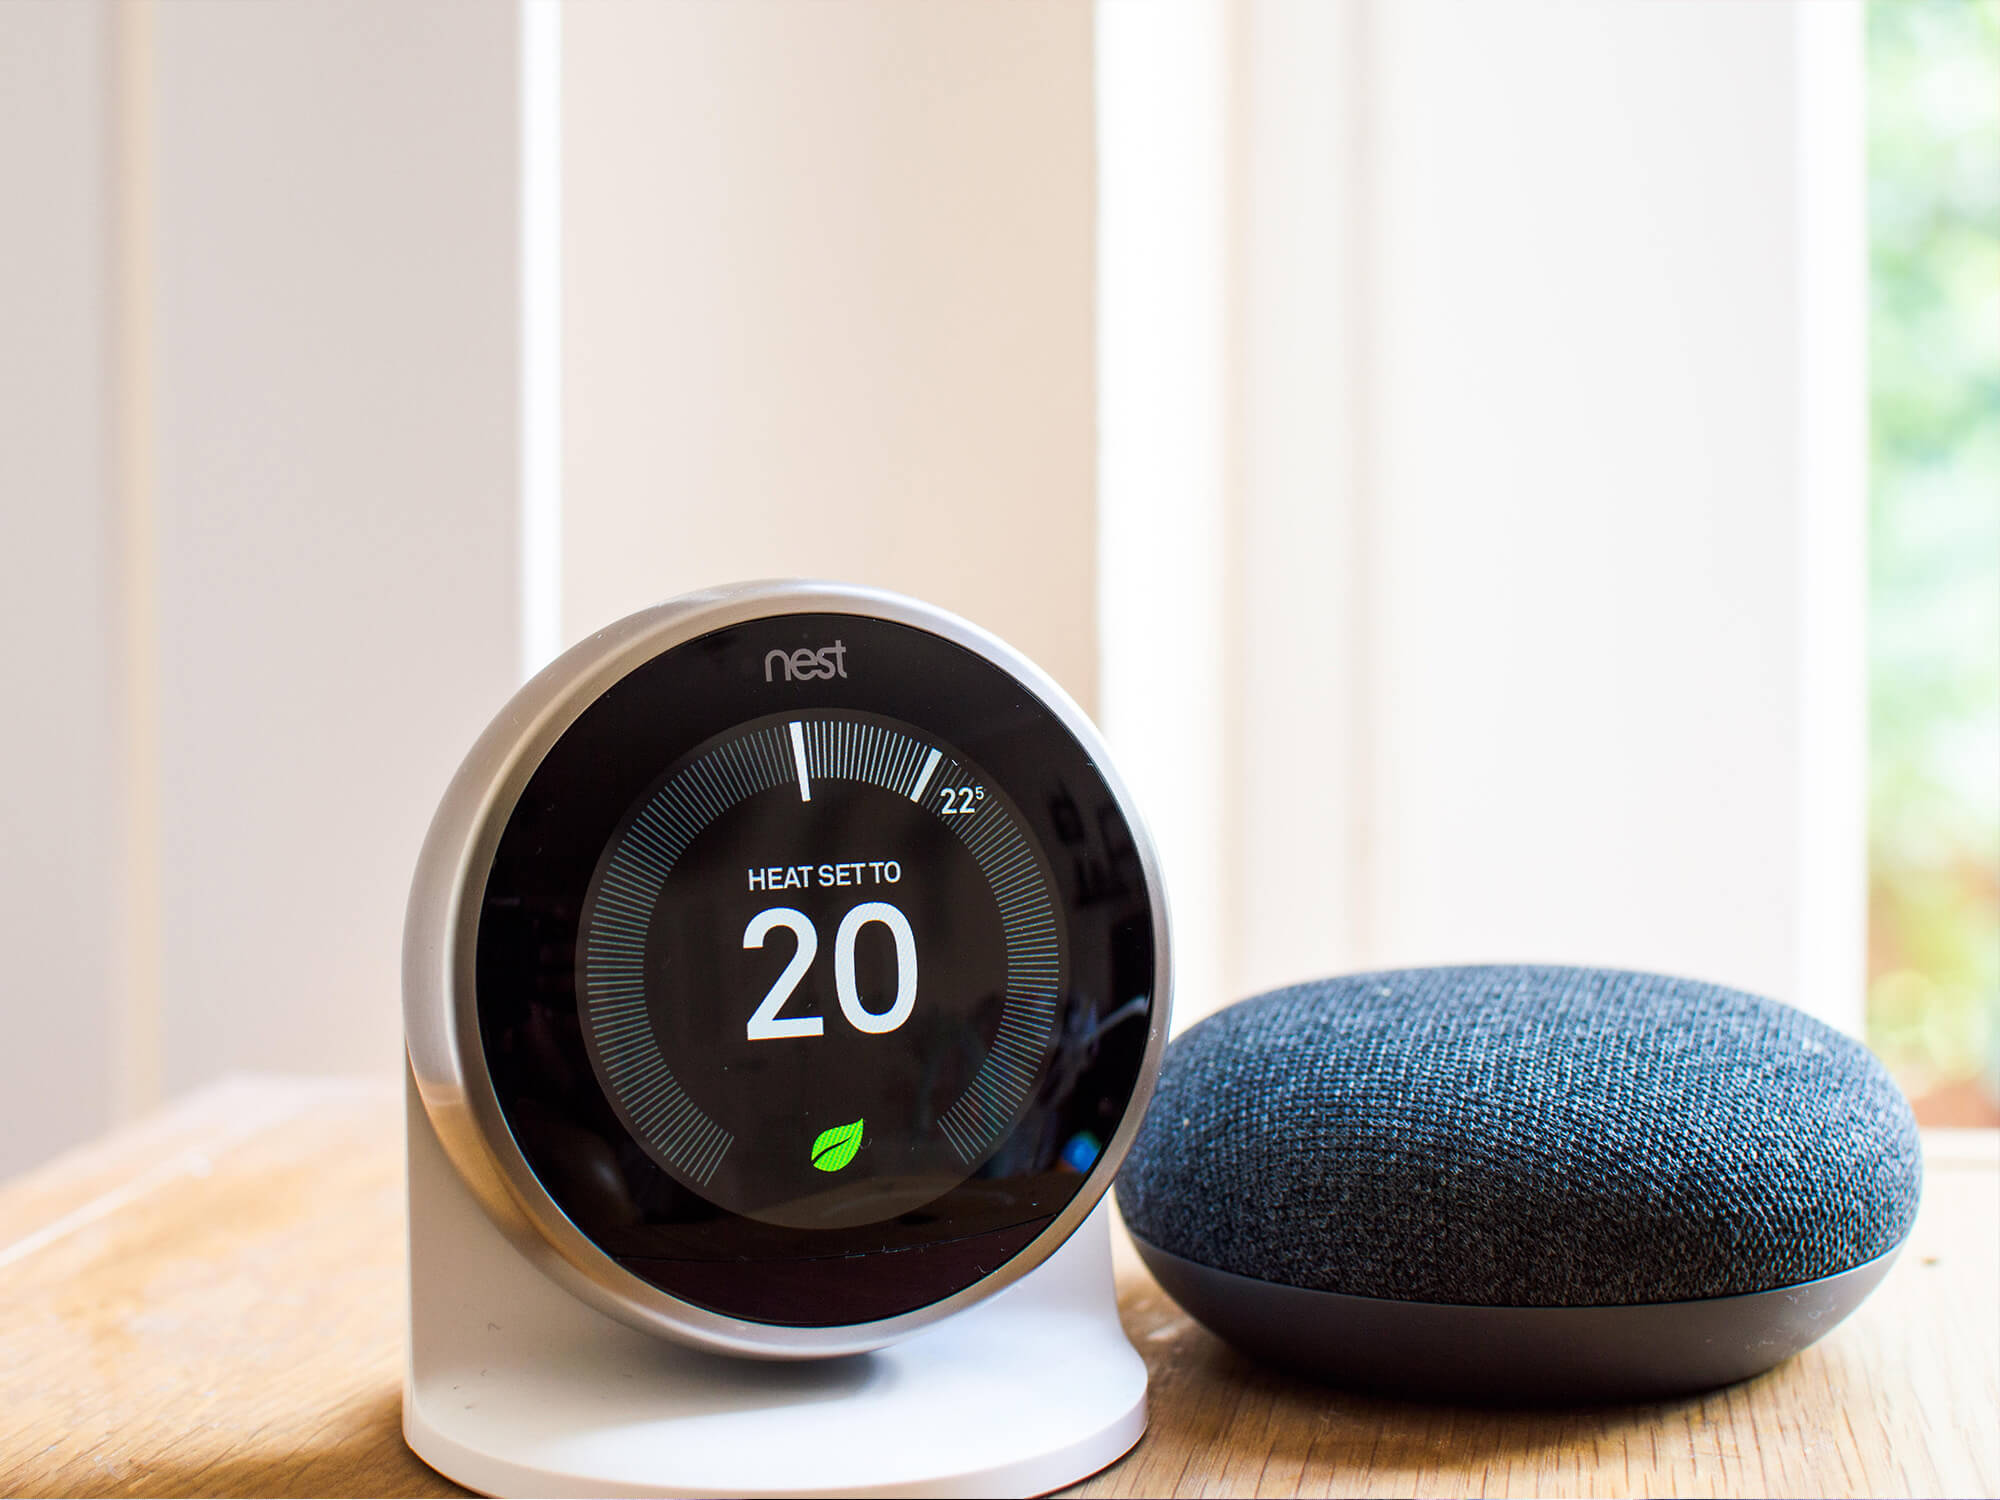 Google Nest Thermostat Benefit (UK Guide) - iHeat